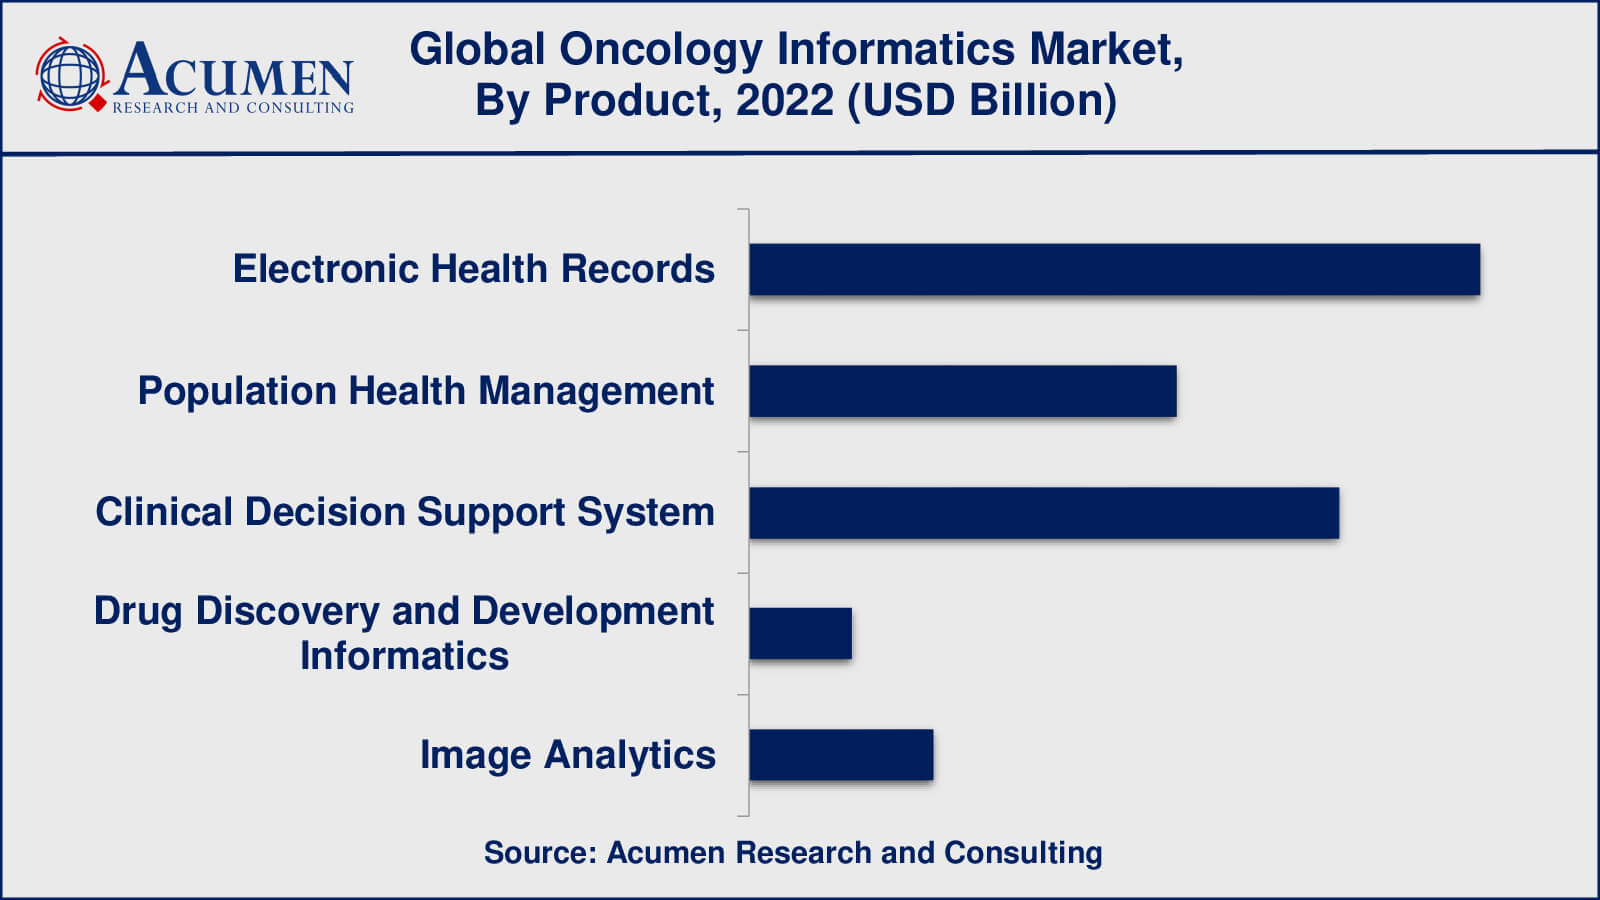 Oncology Informatics Market Drivers